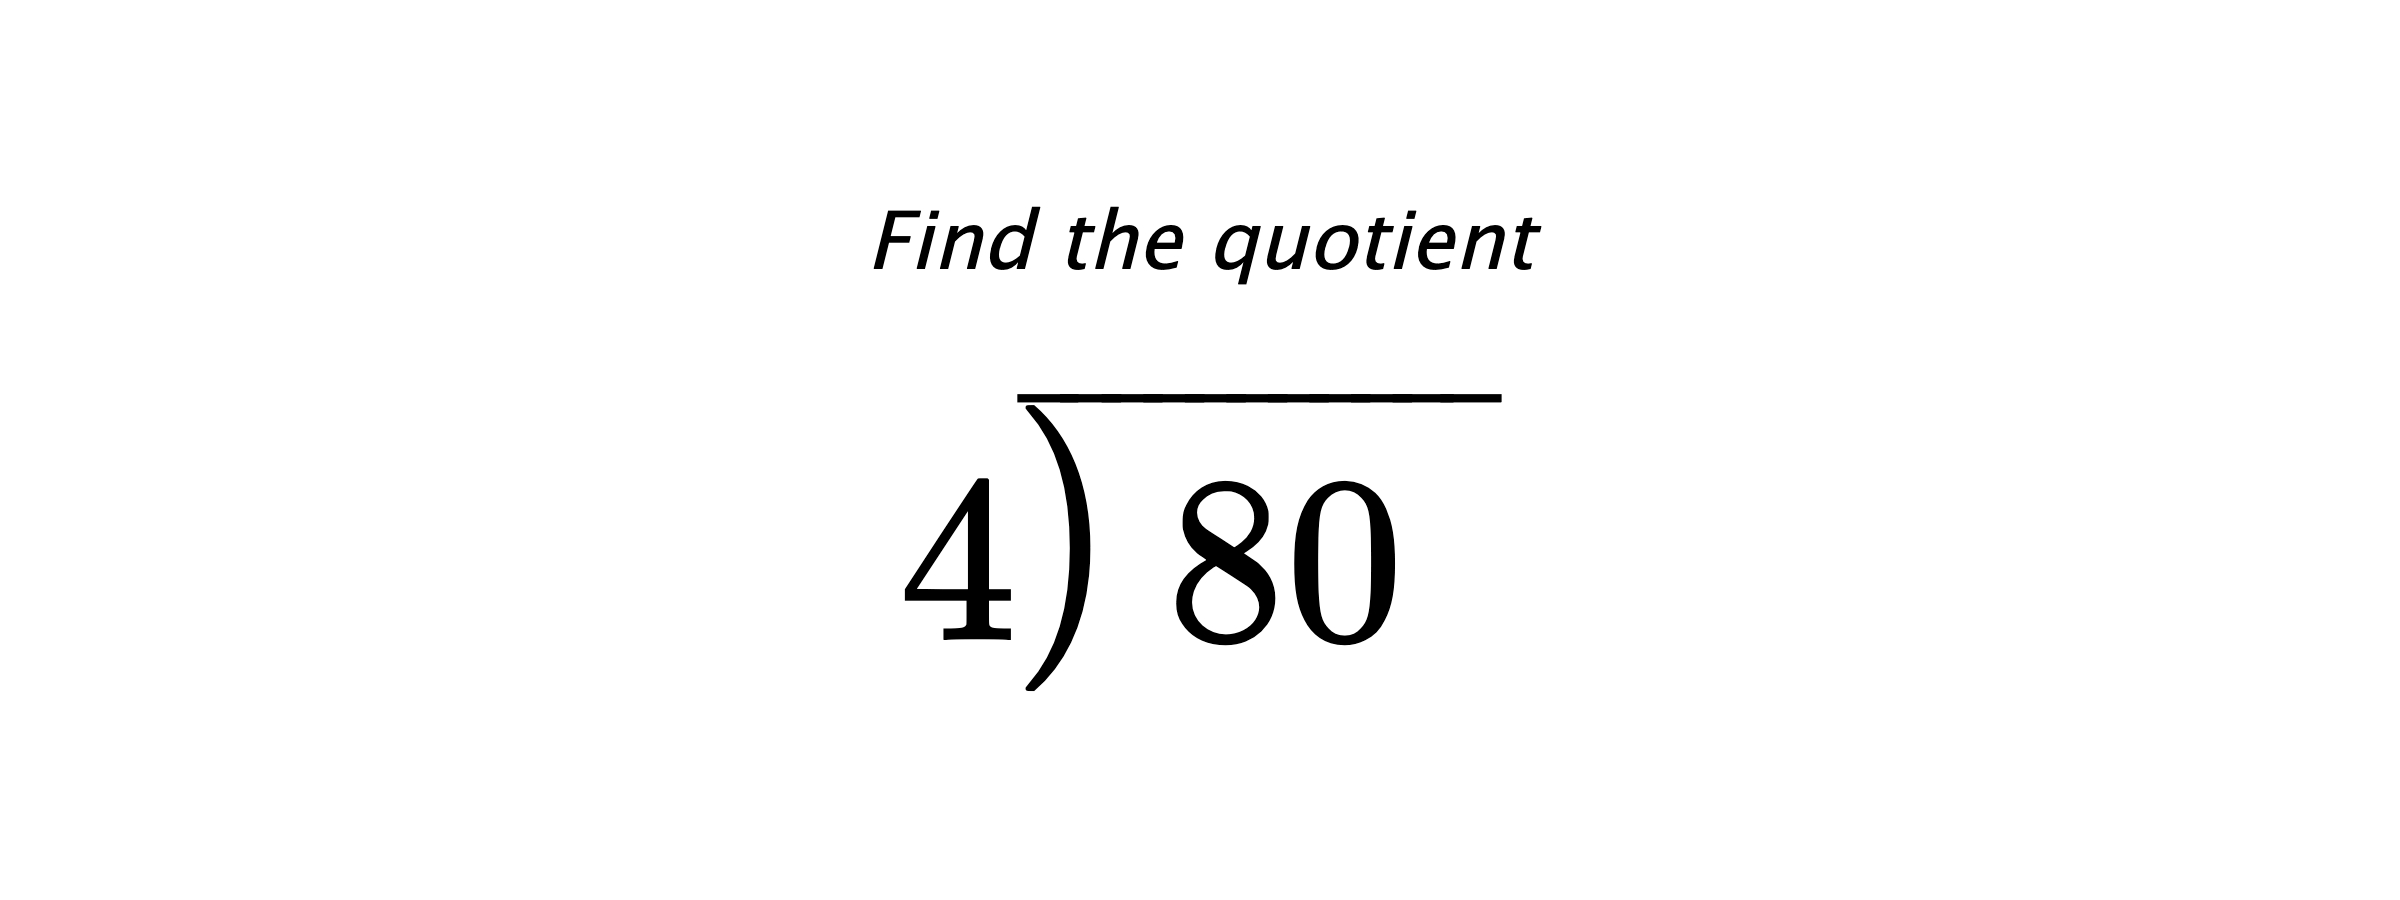 Find the quotient $ 4{\overline{\smash{\raise.3ex\hbox{$\big)$}}\,80\phantom{)}}} $